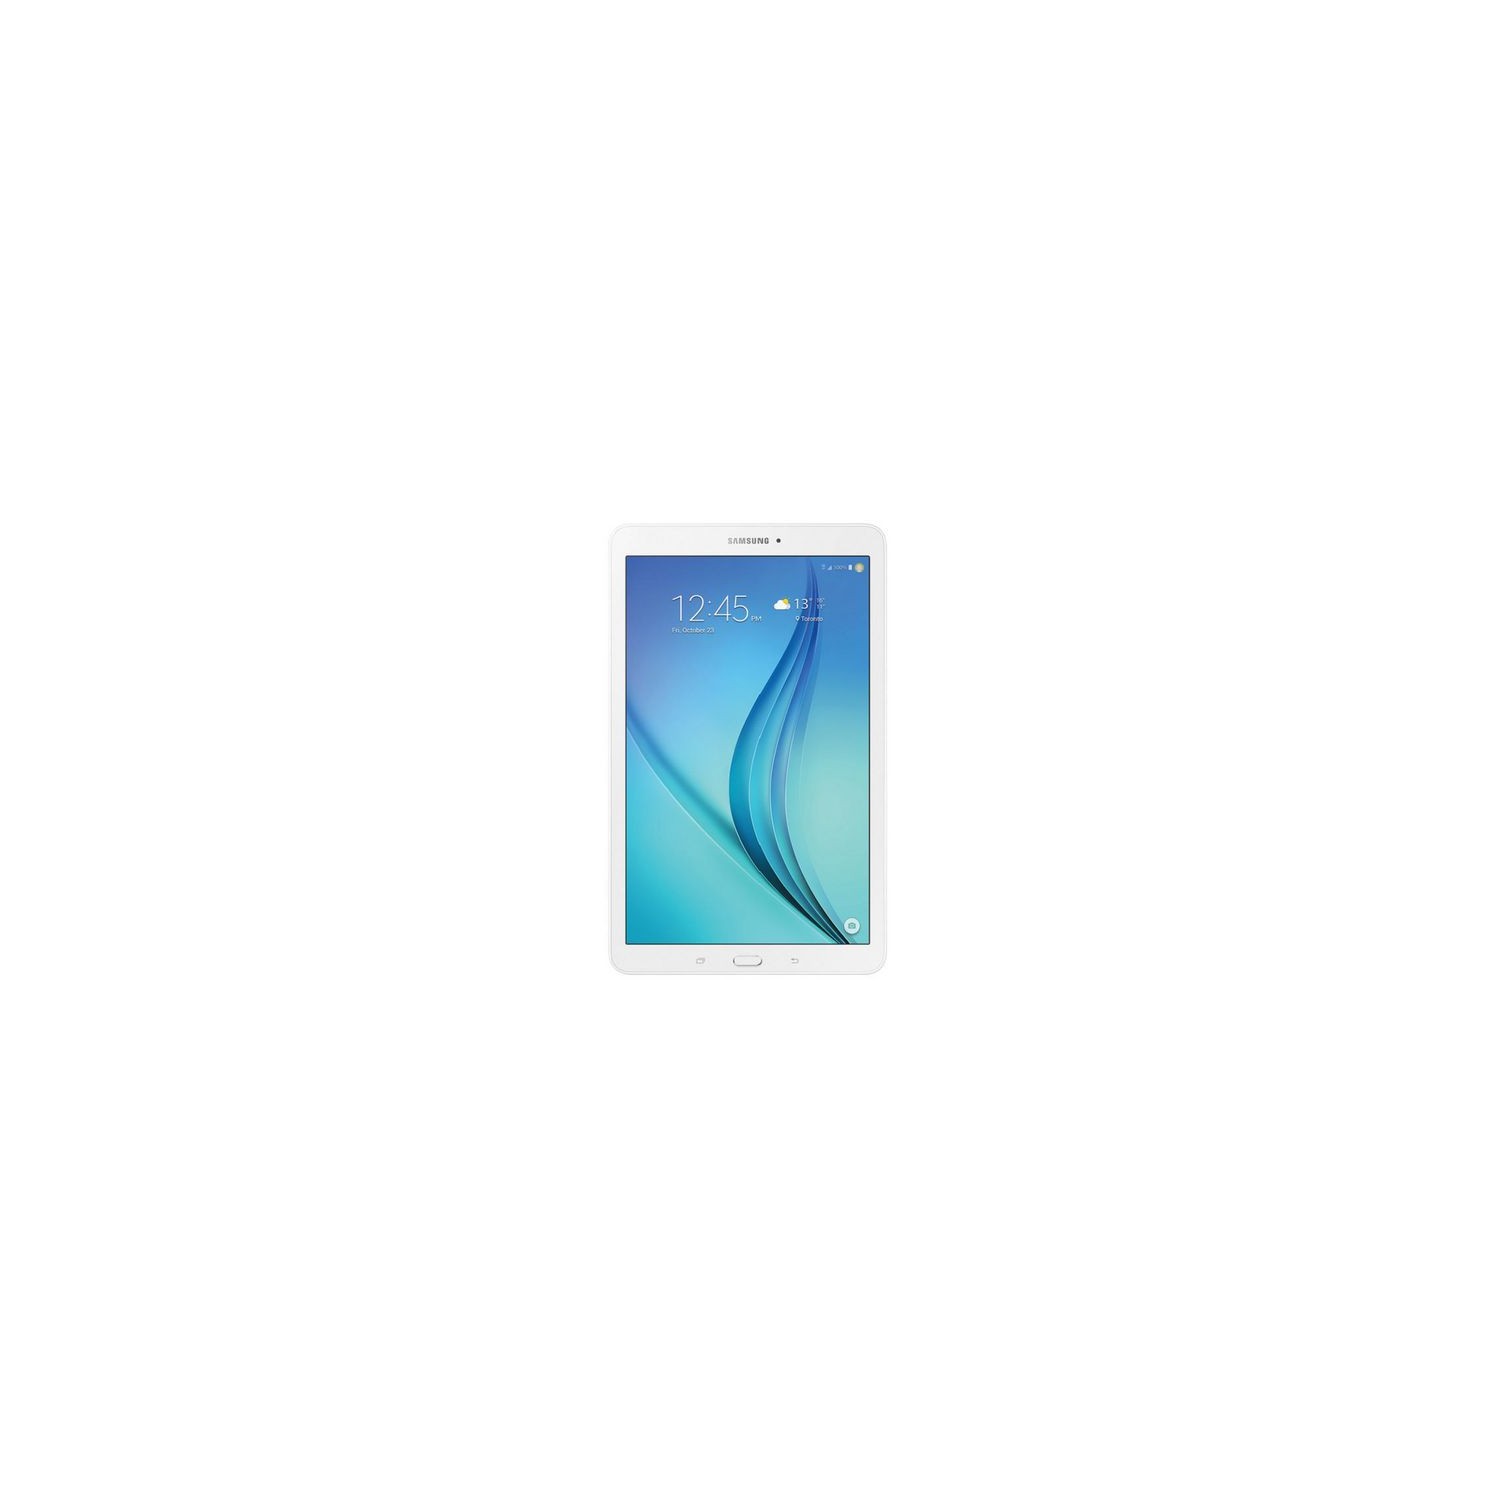 Refurbished (Excellent) - Samsung Galaxy Tab E 9.6" 16GB Android 7.1 Tablet w/ Qualcomm APQ 8016 4-Core Processor -White -Refurb